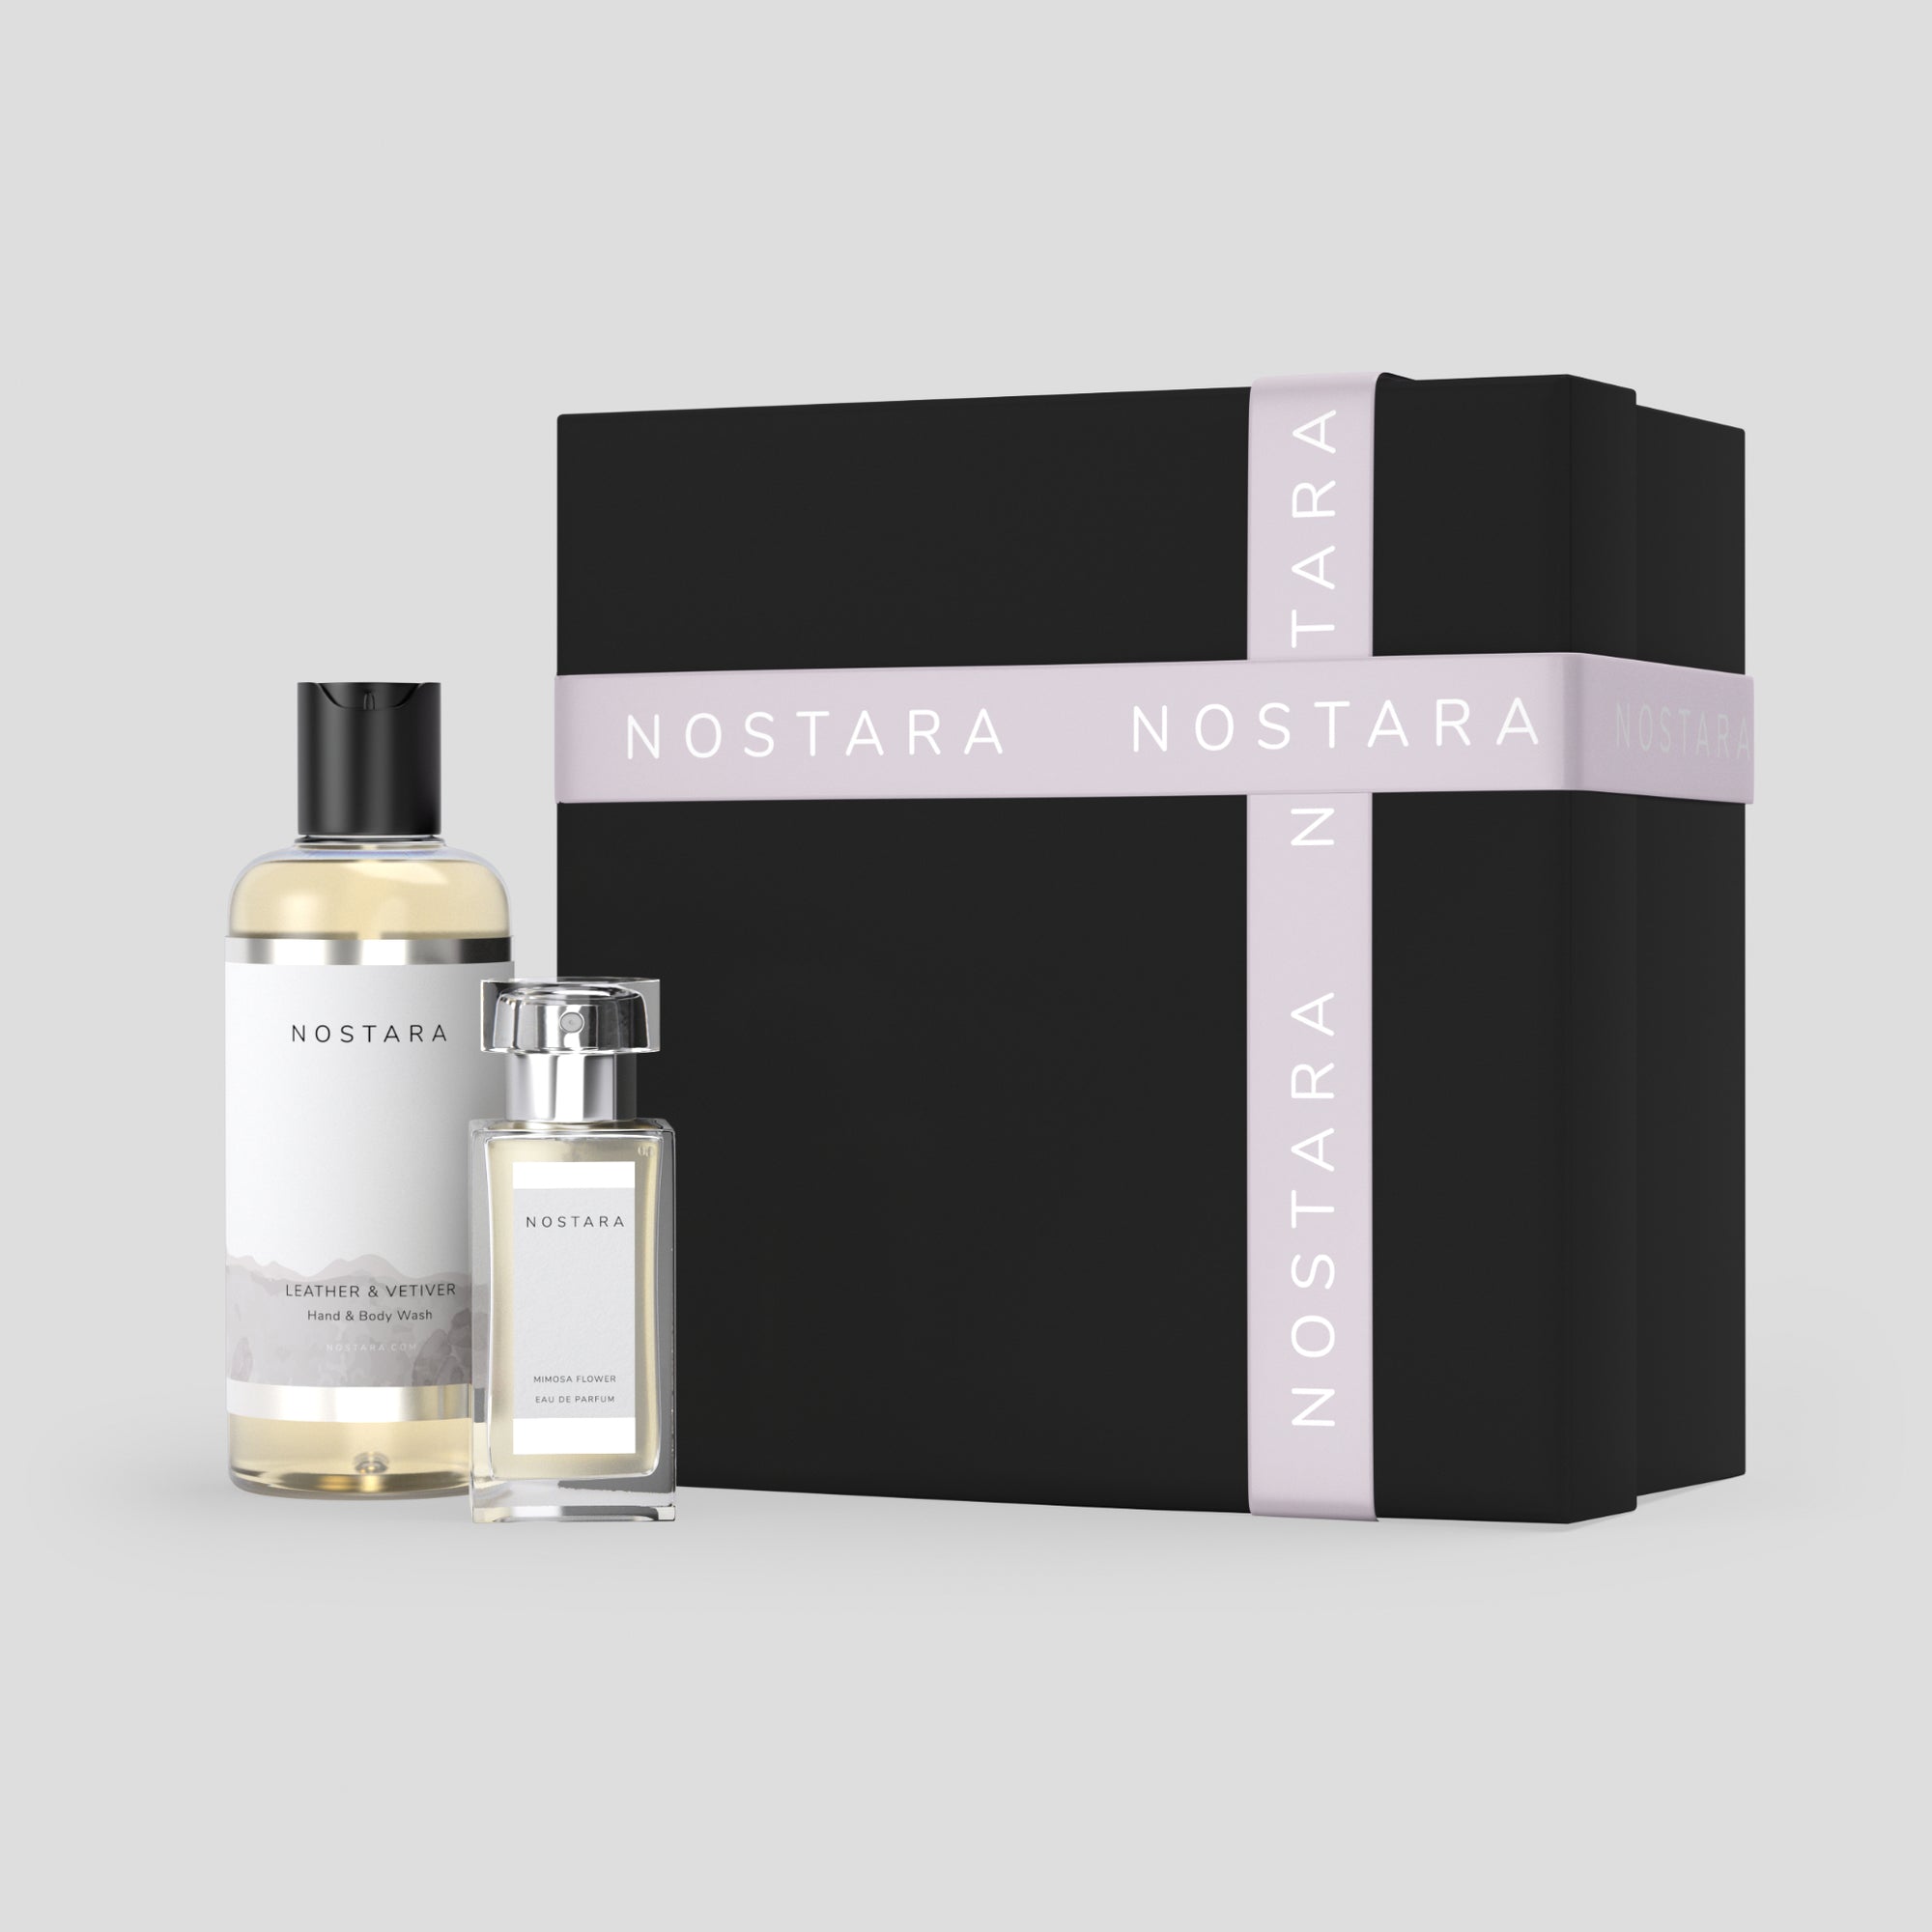 Nostara perfume eau de toilette with body wash gift box